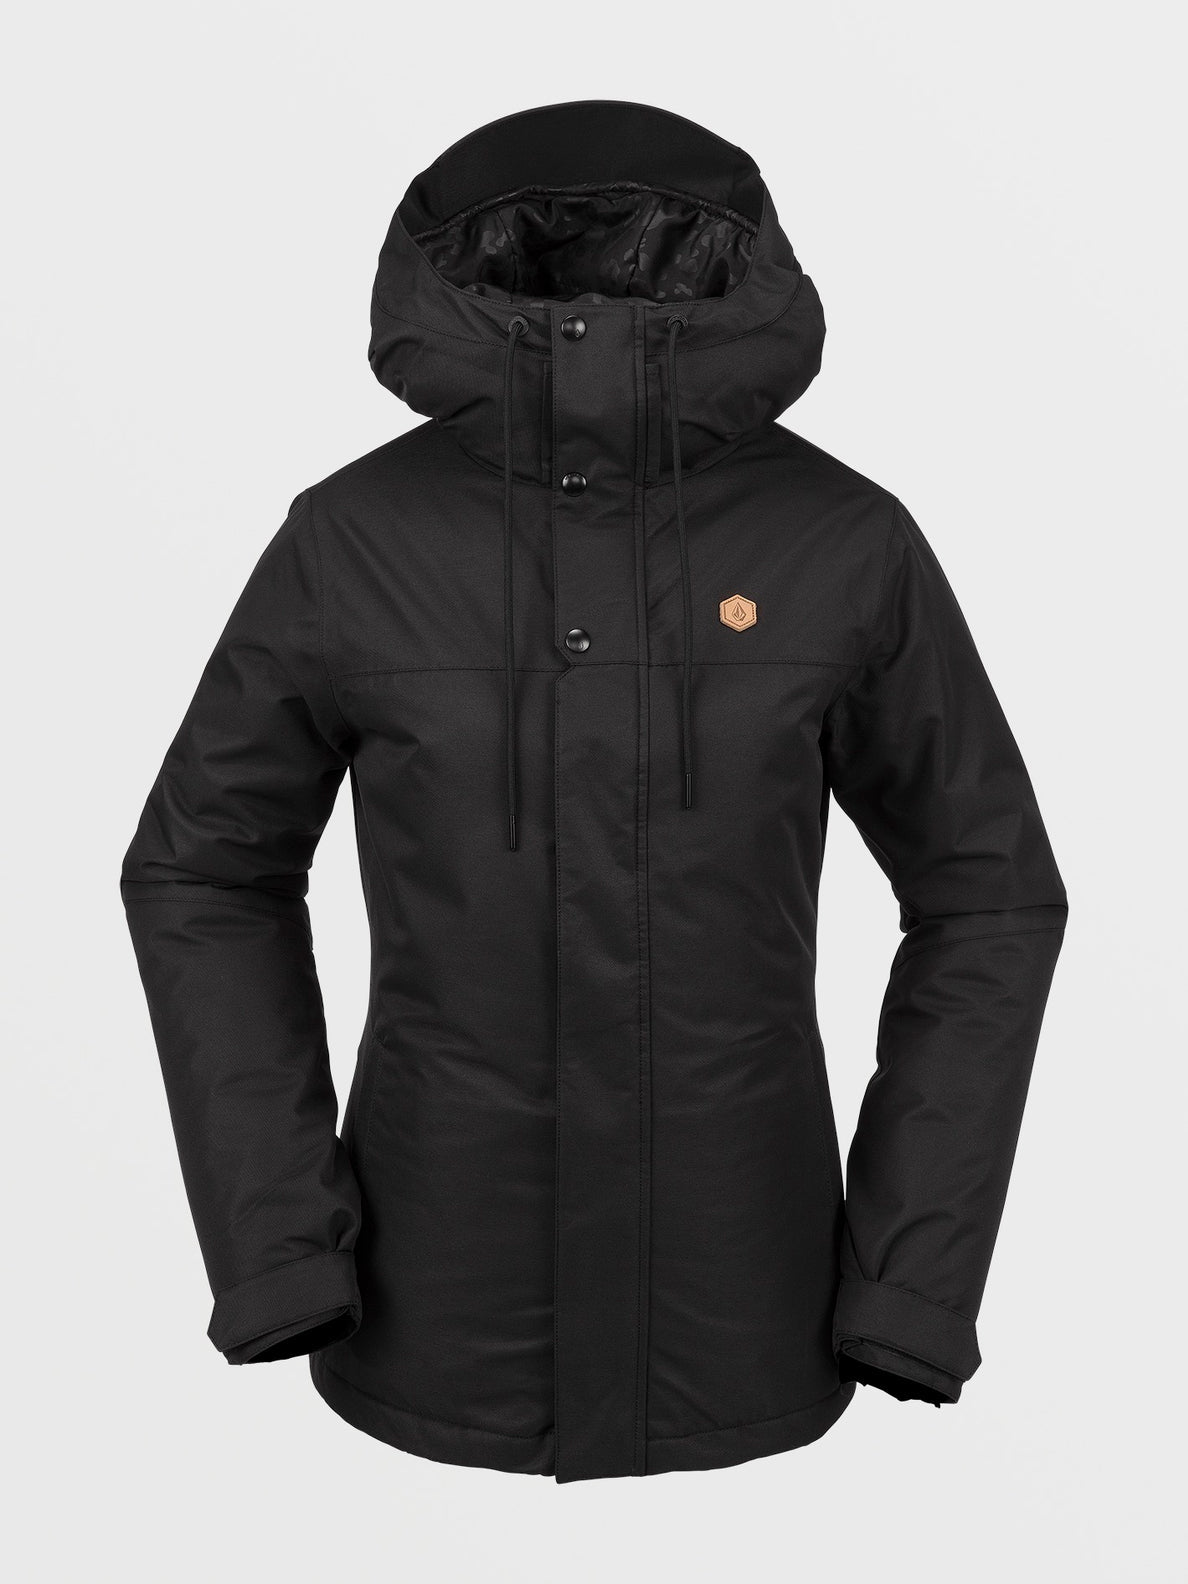 manteau-isole-femme-bolt-noir-volcom-snow-jacket-black-women-isulated-dm2-shop-04